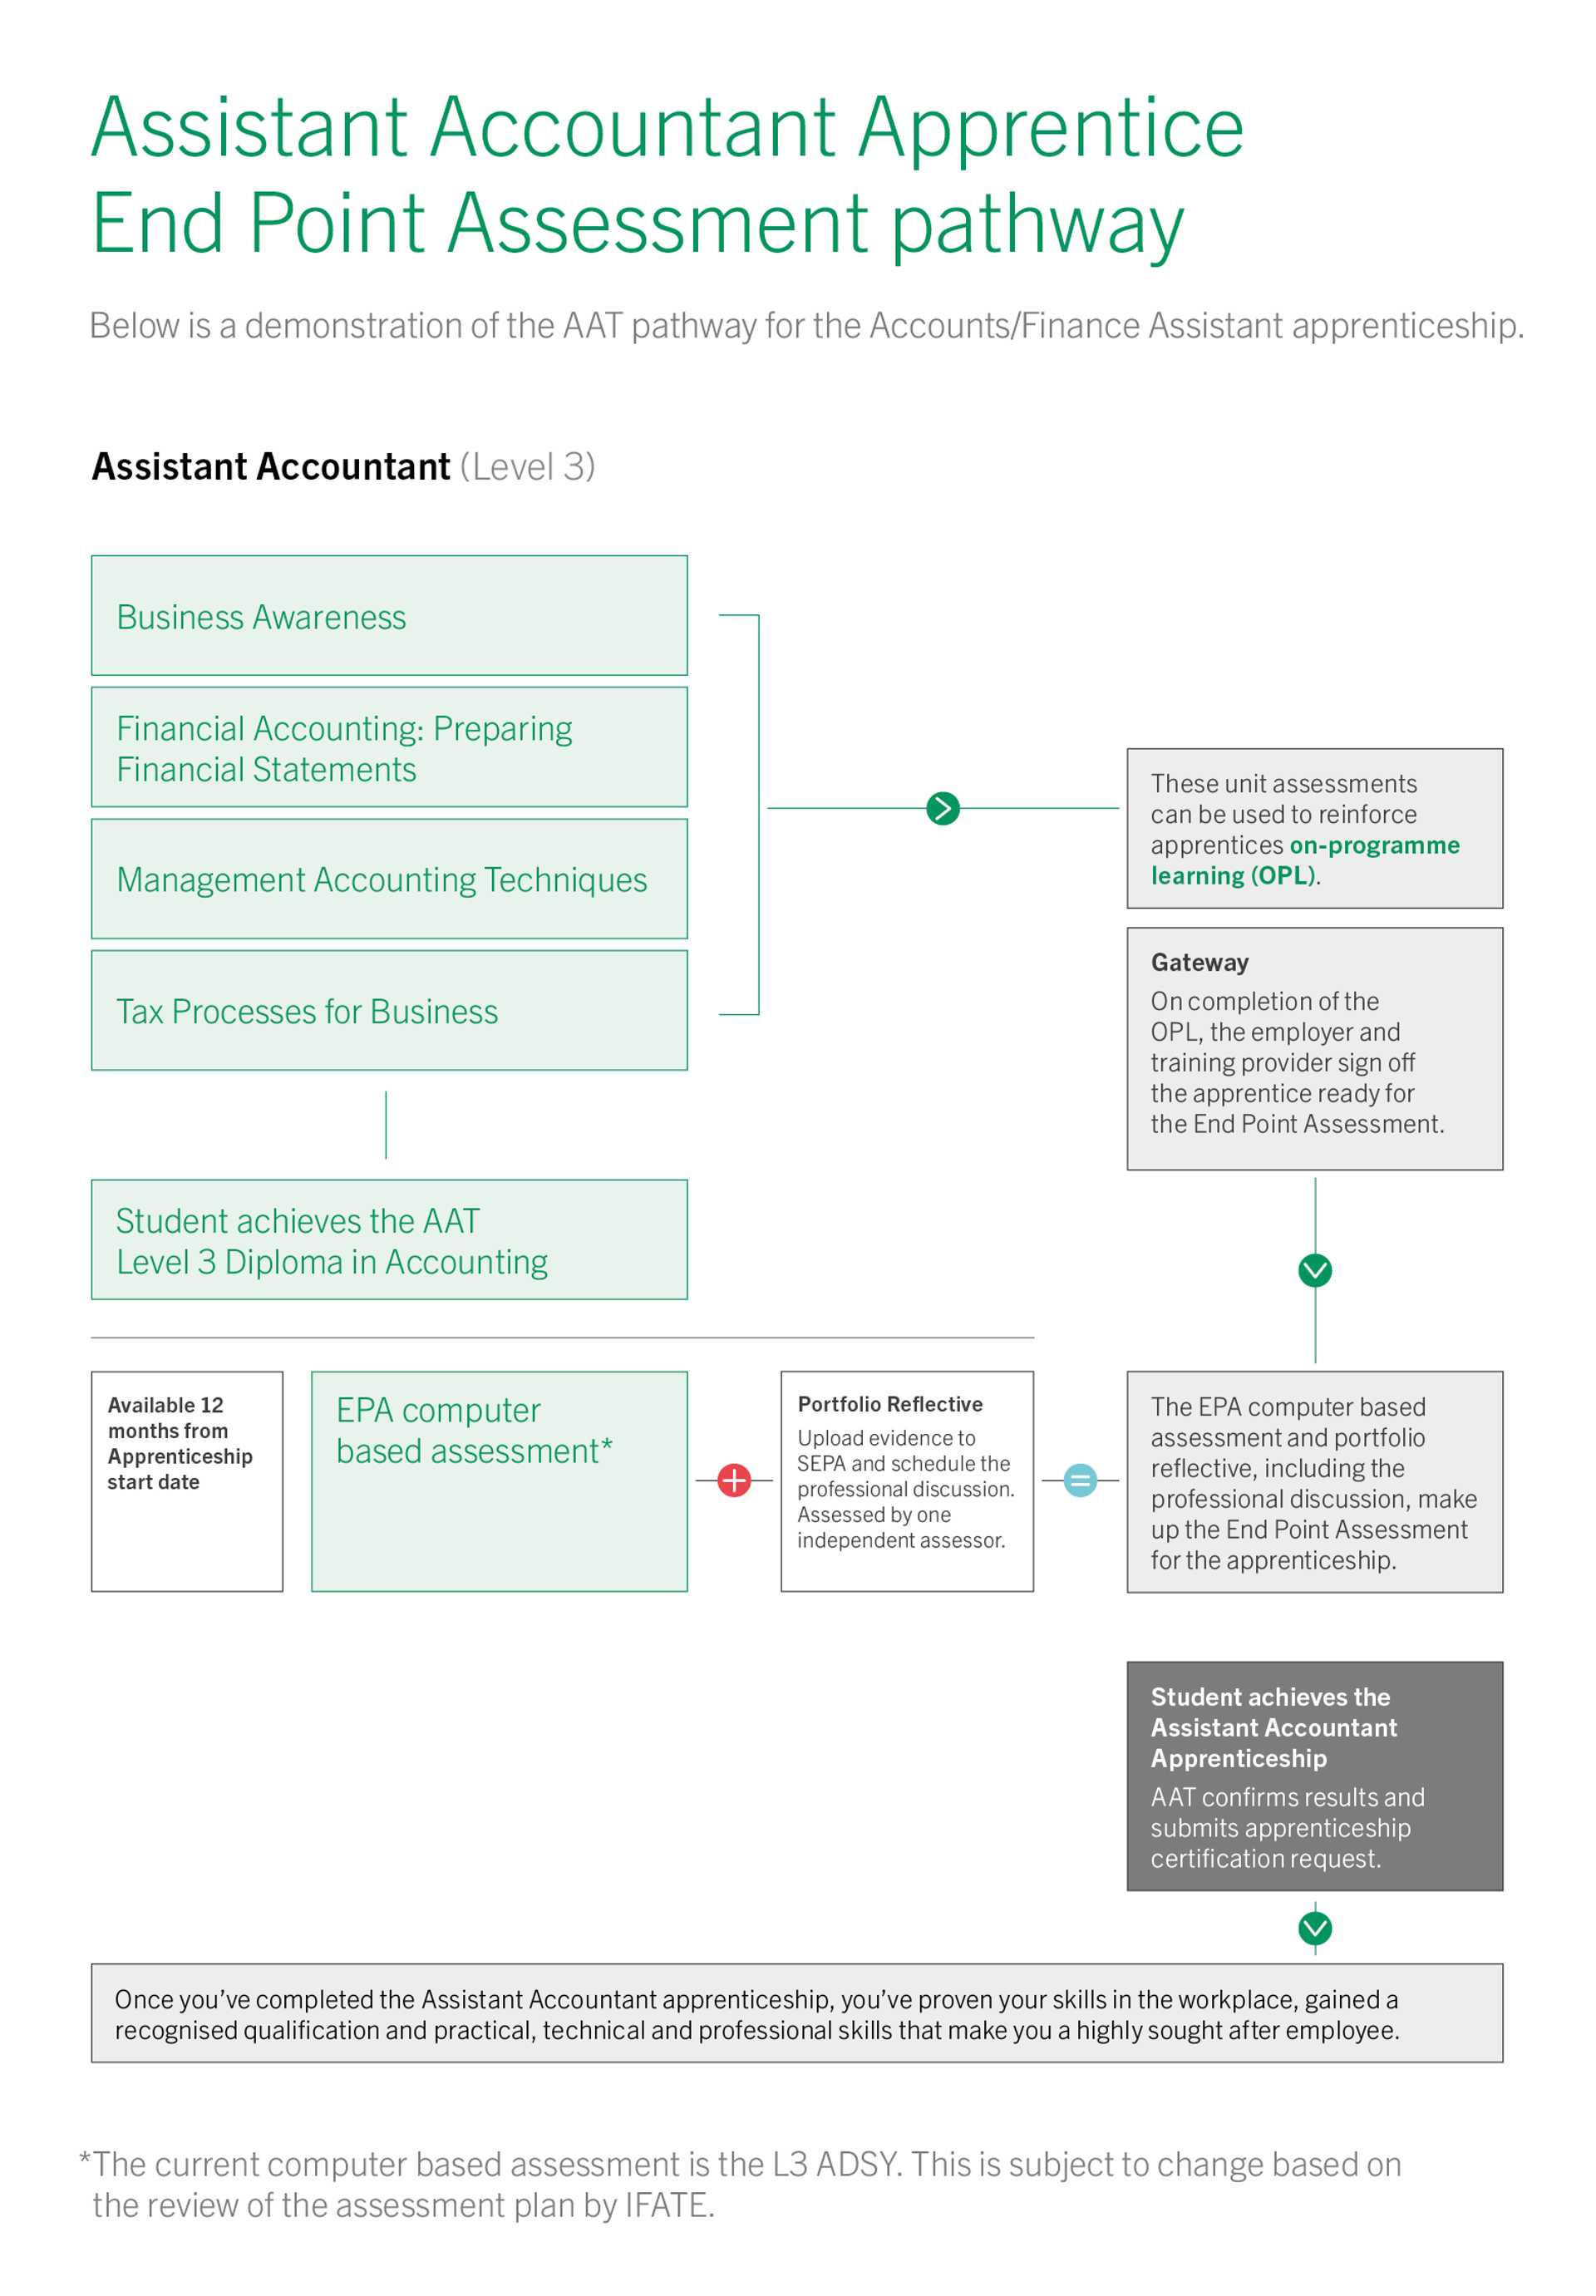 Assistant Accountant apprenticeship EPA pathway